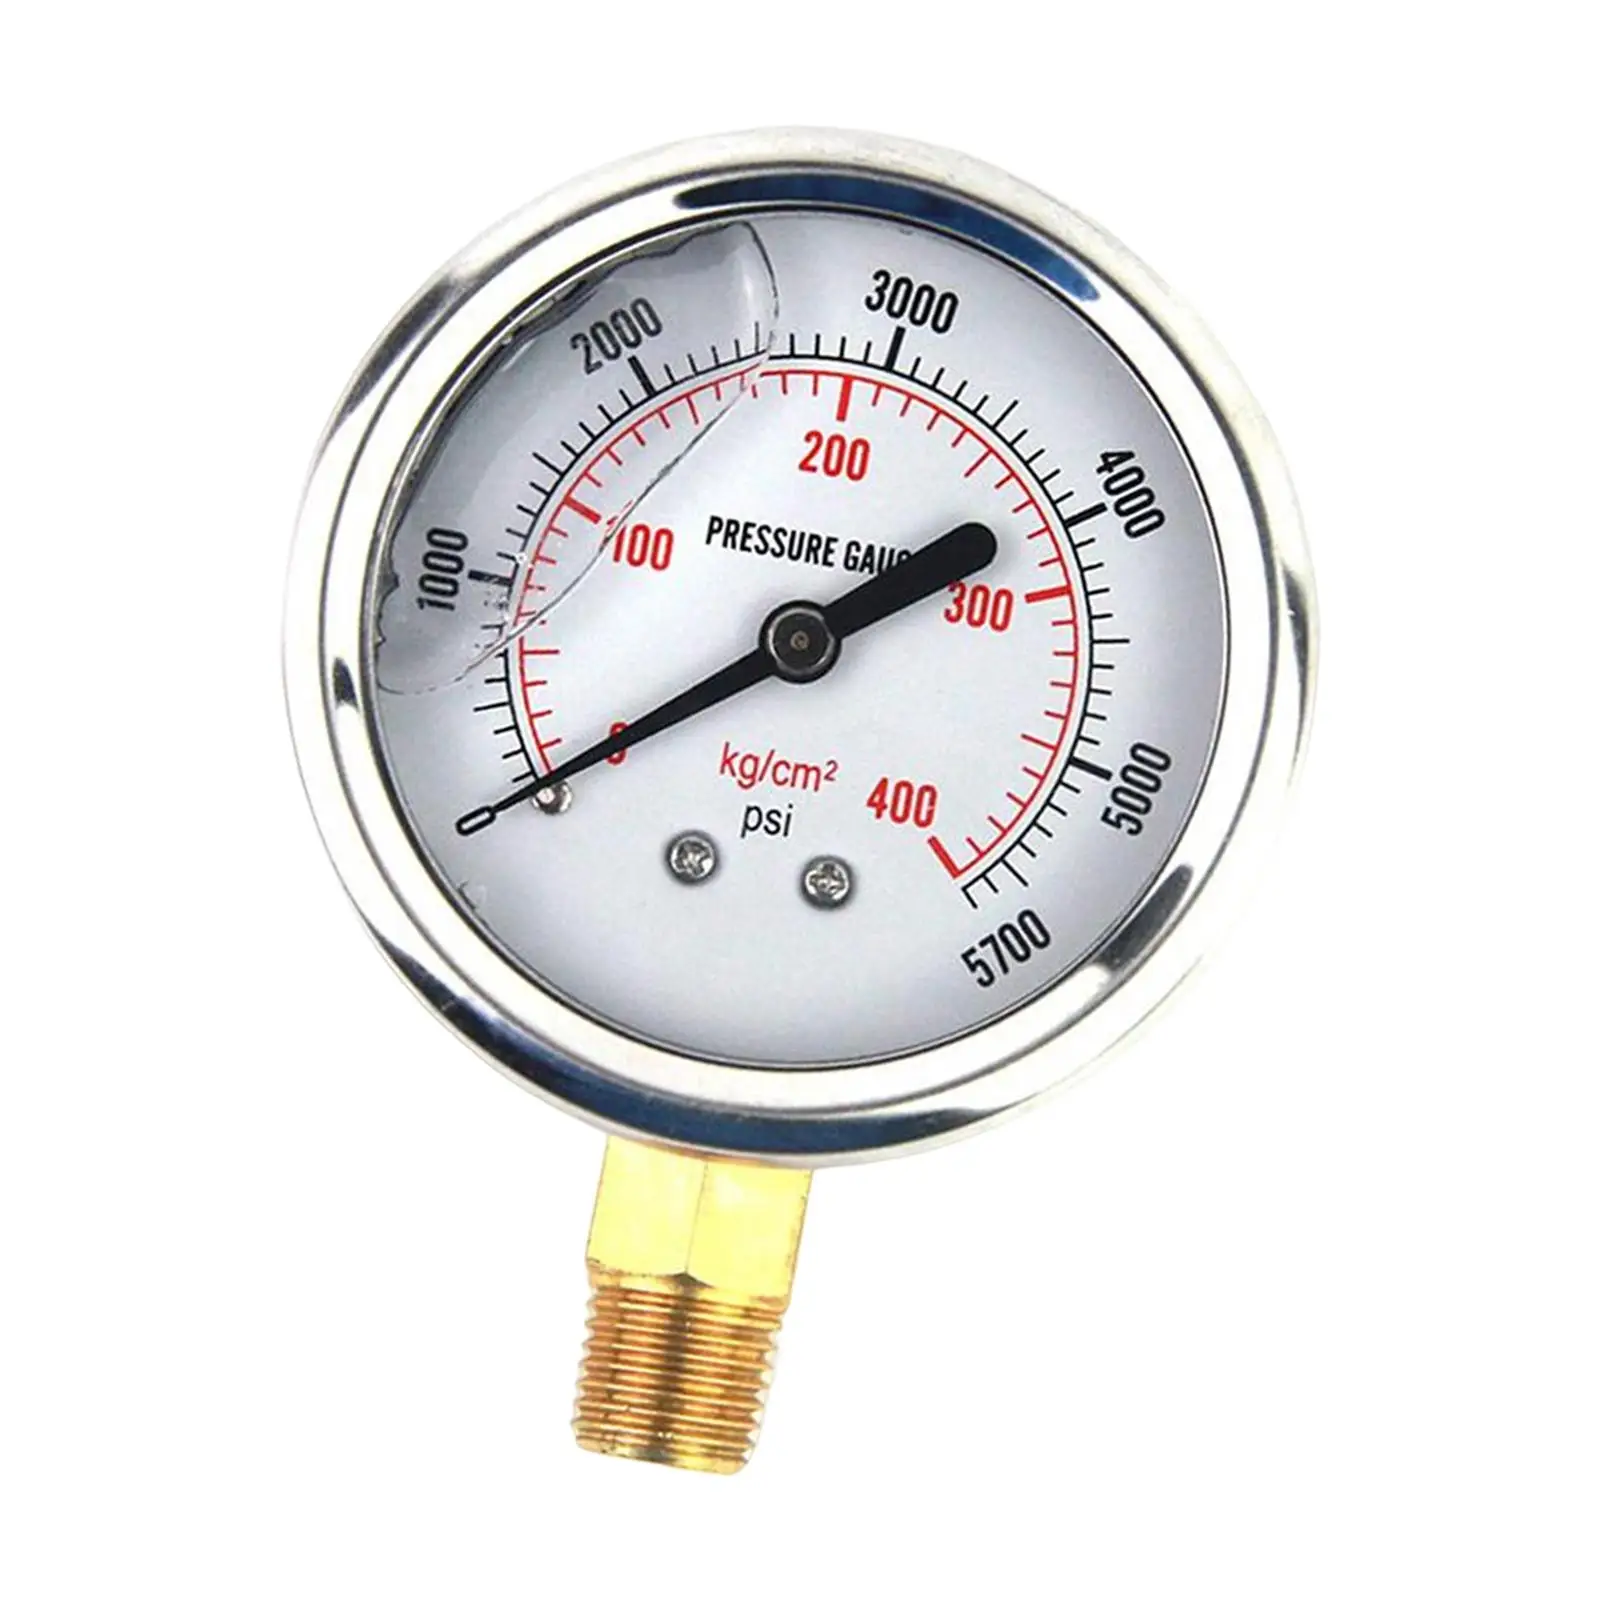 Professional Hydraulic Pressure Gauge Automotive Water Pressure 1/4in NPT Lower Mount US Standard Thread Liquid Filled Universal